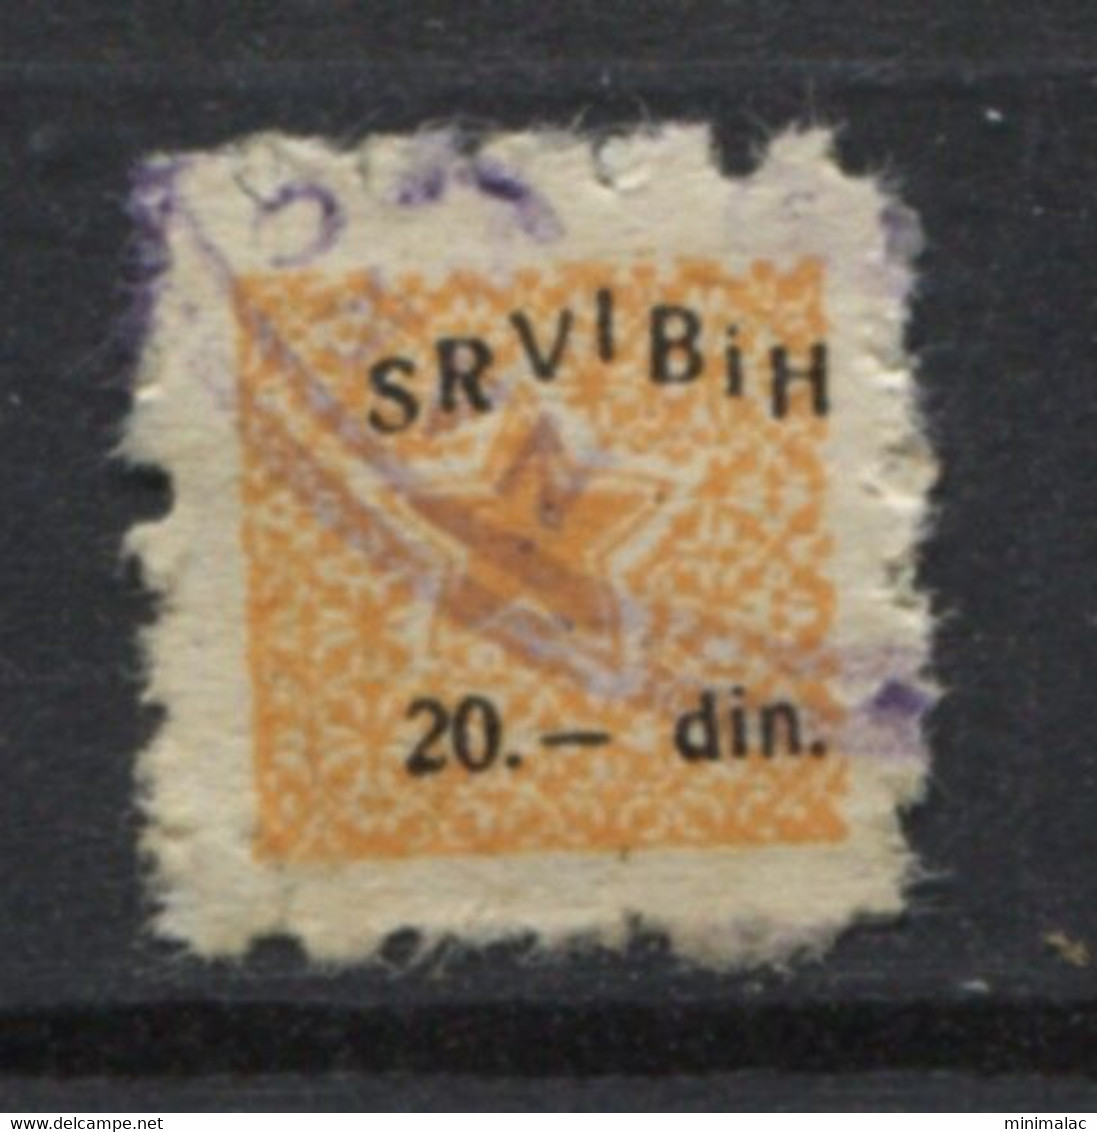 Yugoslavia 1958, Stamp For Membership, SRVIBiH, Labor Union, Administrative Stamp - Revenue, Tax Stamp, 20d    Used - Servizio